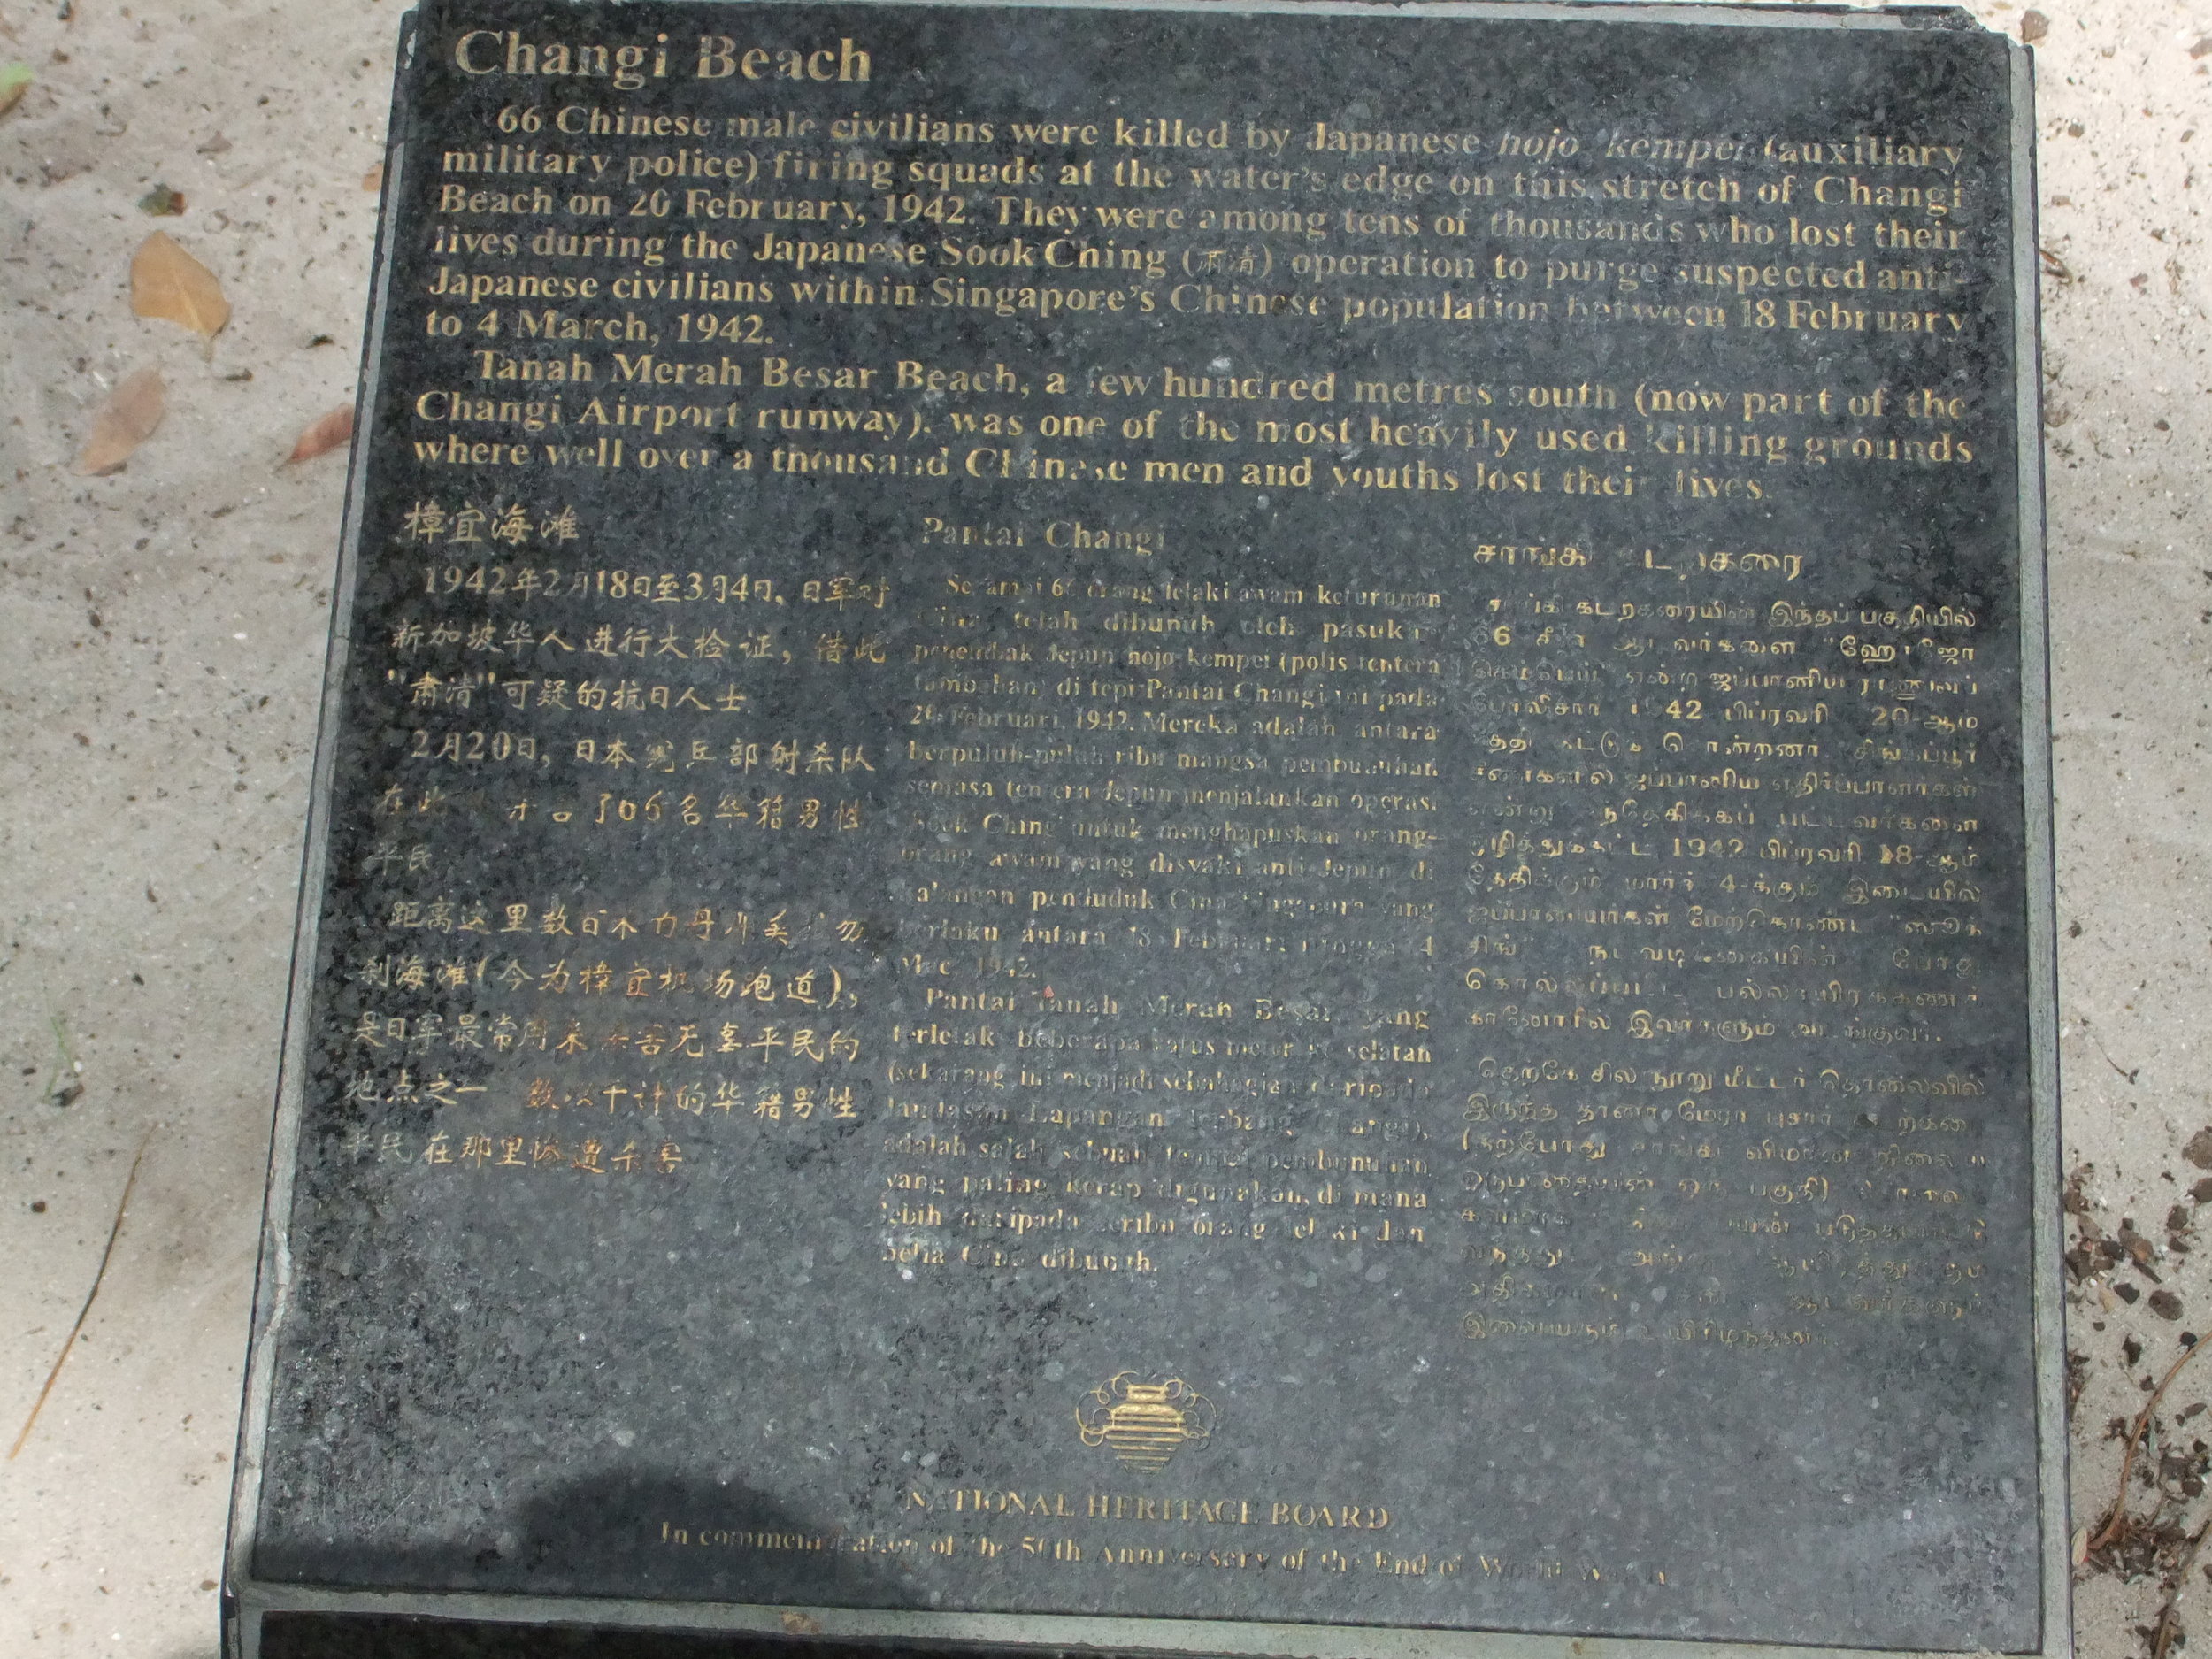 Former Sook Ching Massacre site at Changi Beach